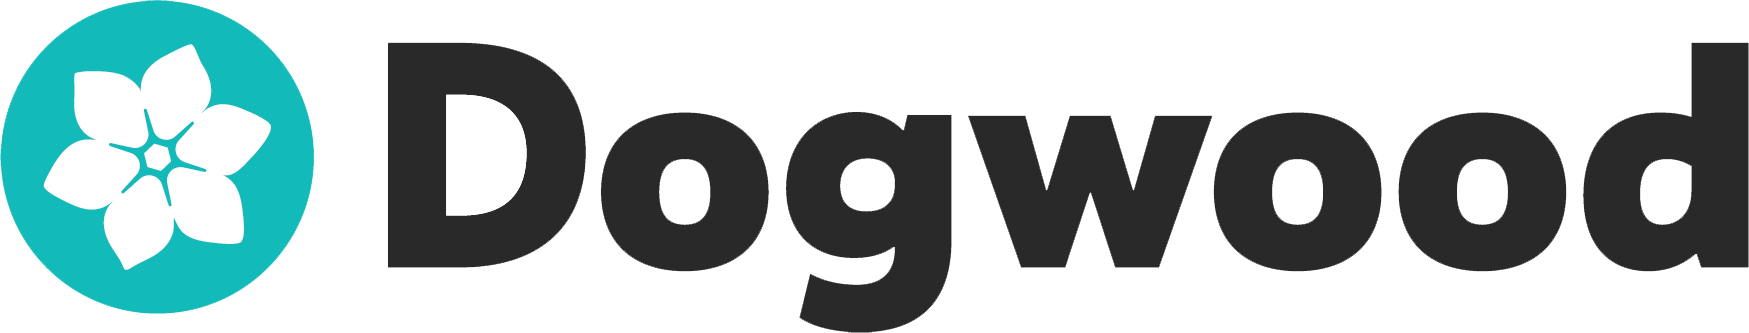 Dogwood-logo-aqua-transparent (1)